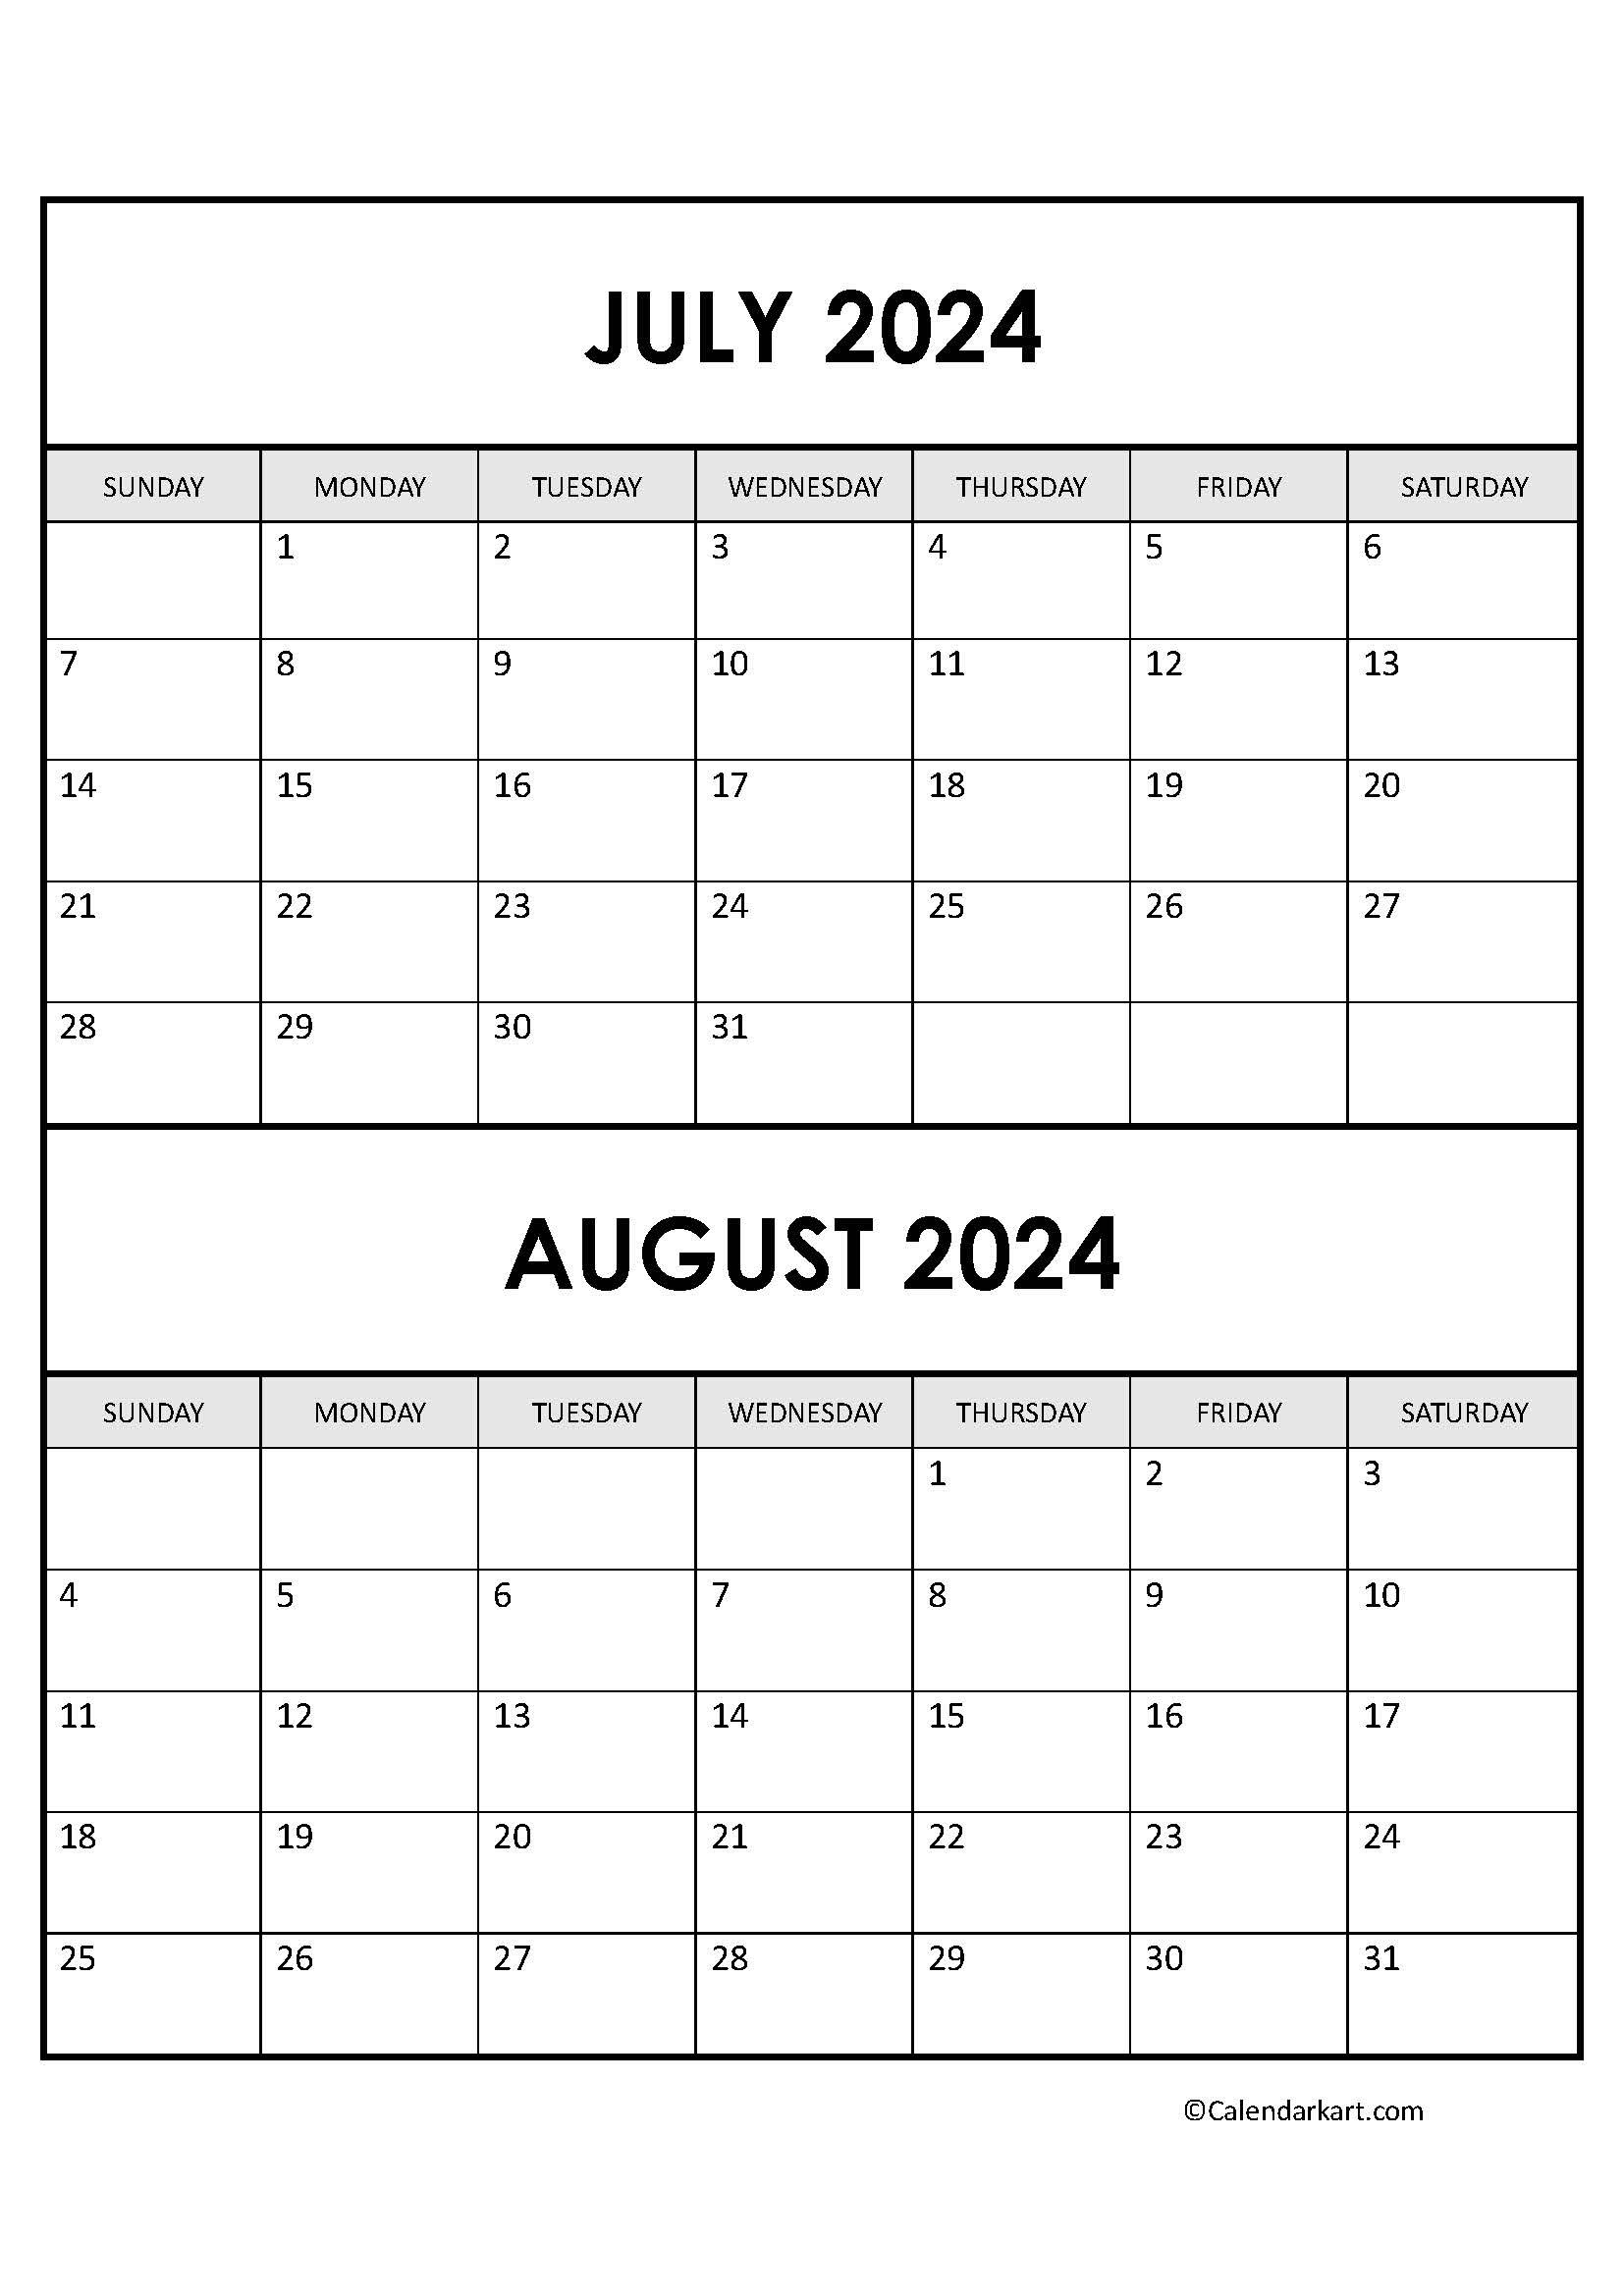 Printable July August 2024 Calendar | Calendarkart regarding Blank July August Calendar 2024